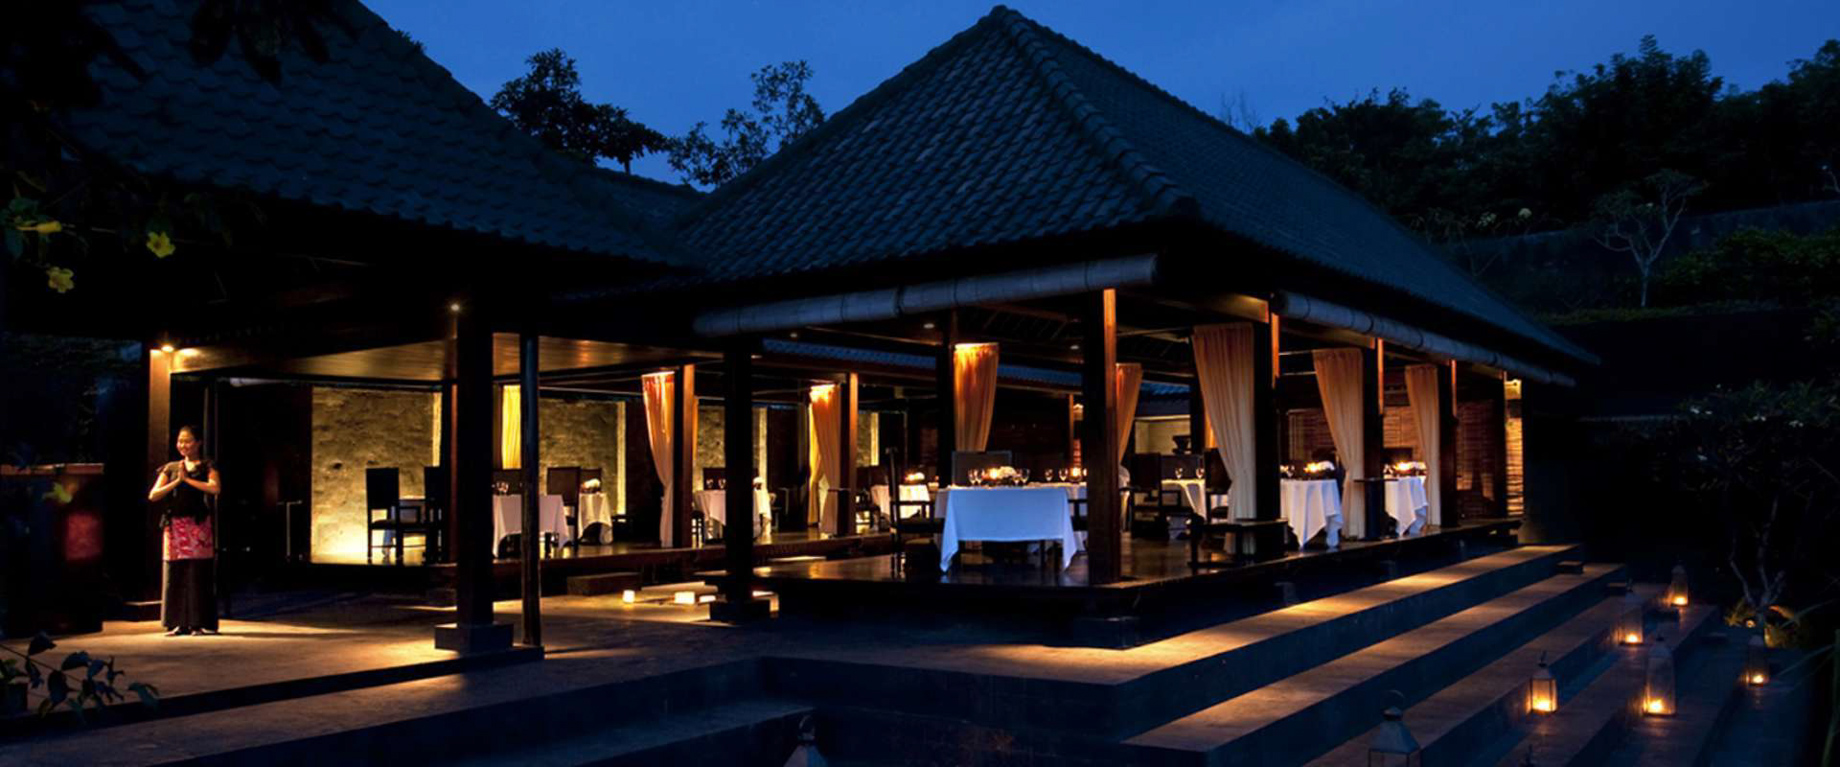 Bvlgari Resort Bali – Uluwatu, Bali, Indonesia – Il Ristorante Luca Fantin Exterior Night